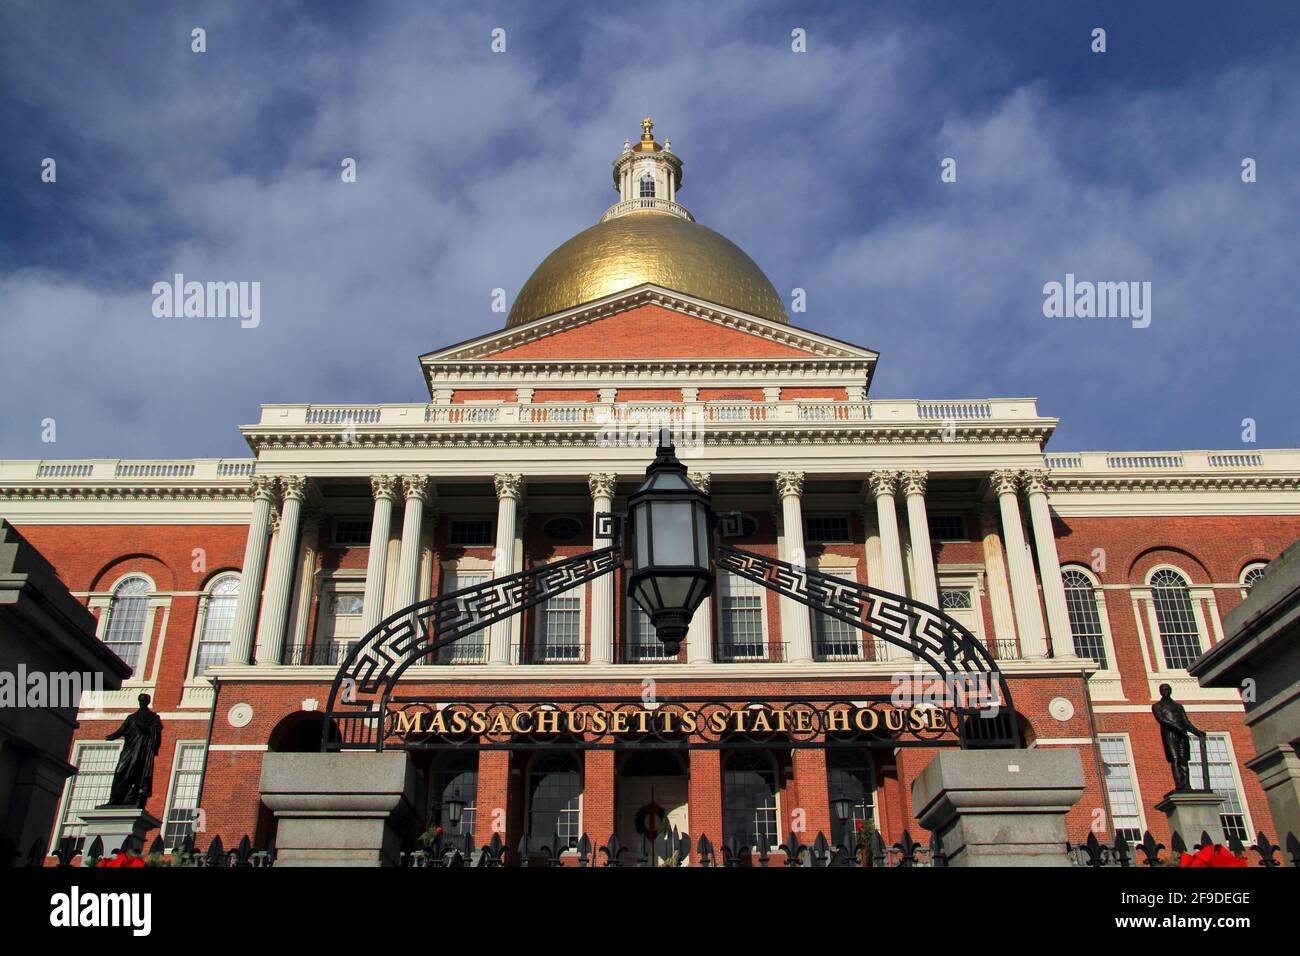 Das Massachusetts State House ist ein beliebter Halt am Freedom Trail in Boston, Massachusetts, 22. Dezember 2019 in Boston, Massachusetts Stockfoto